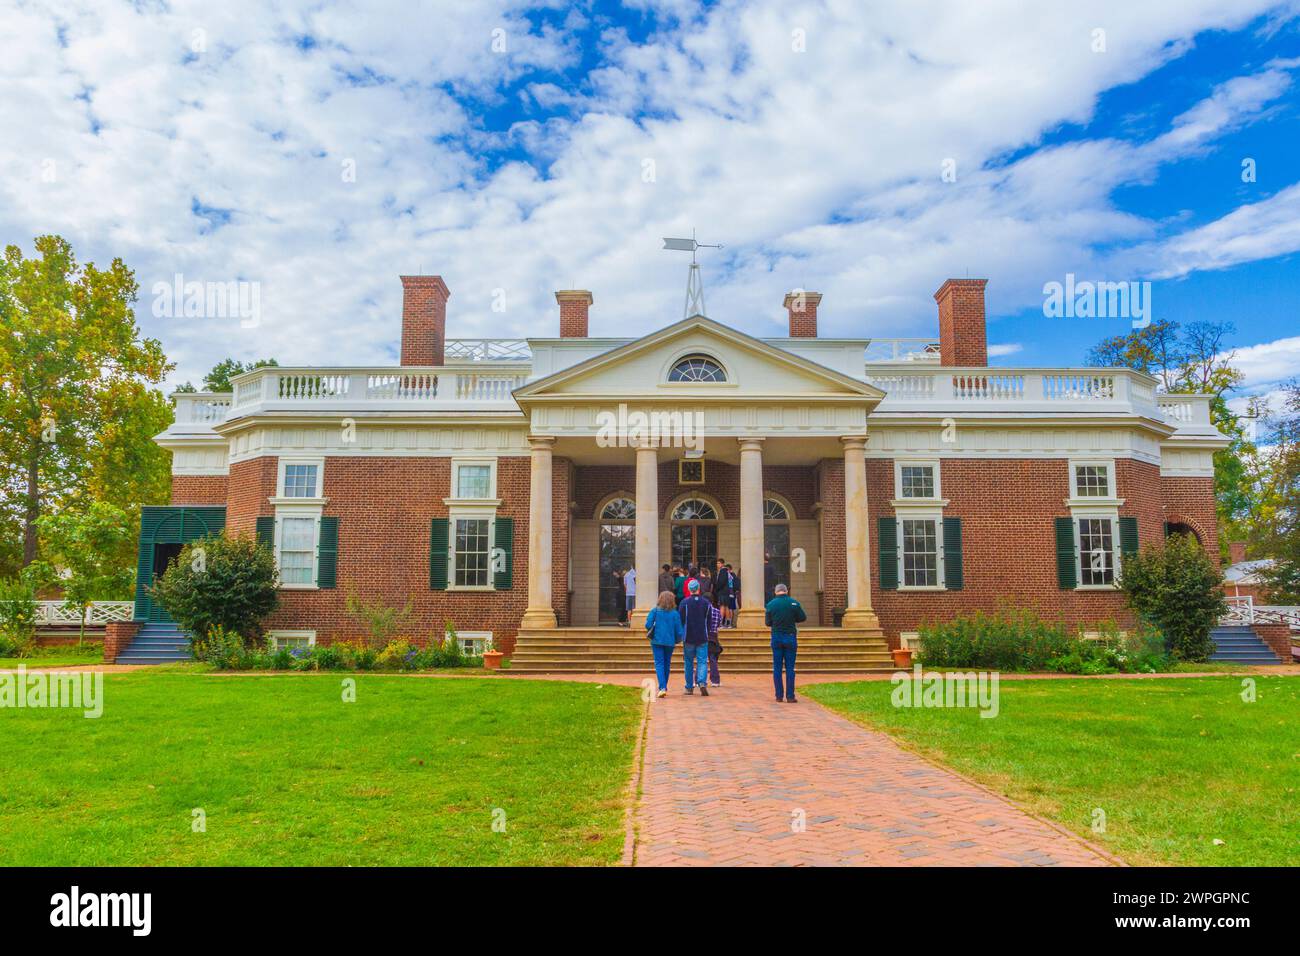 World Heritage Site, Monticello plantation and estates, home of Thomas Jefferson, third president of the United States. Stock Photo